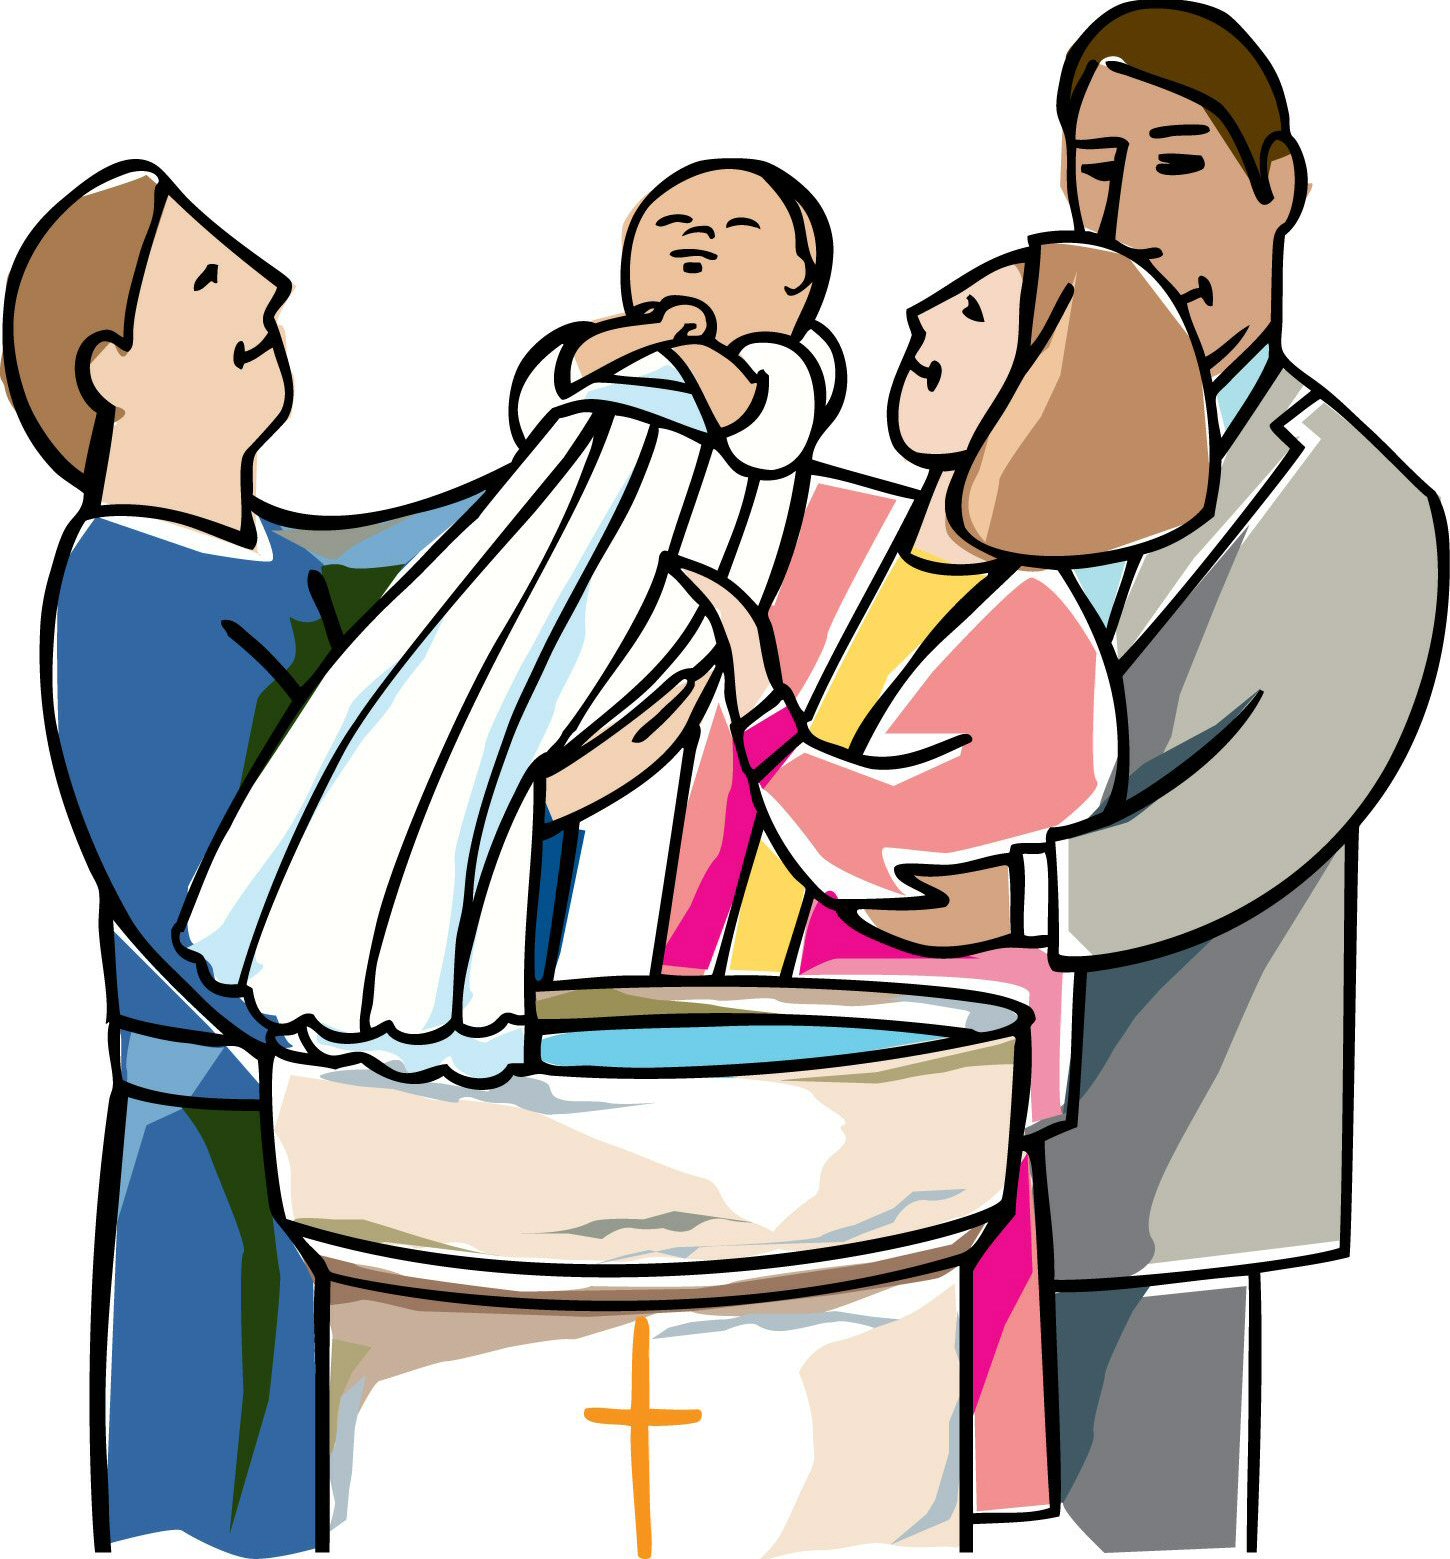 umc infant baptism clipart